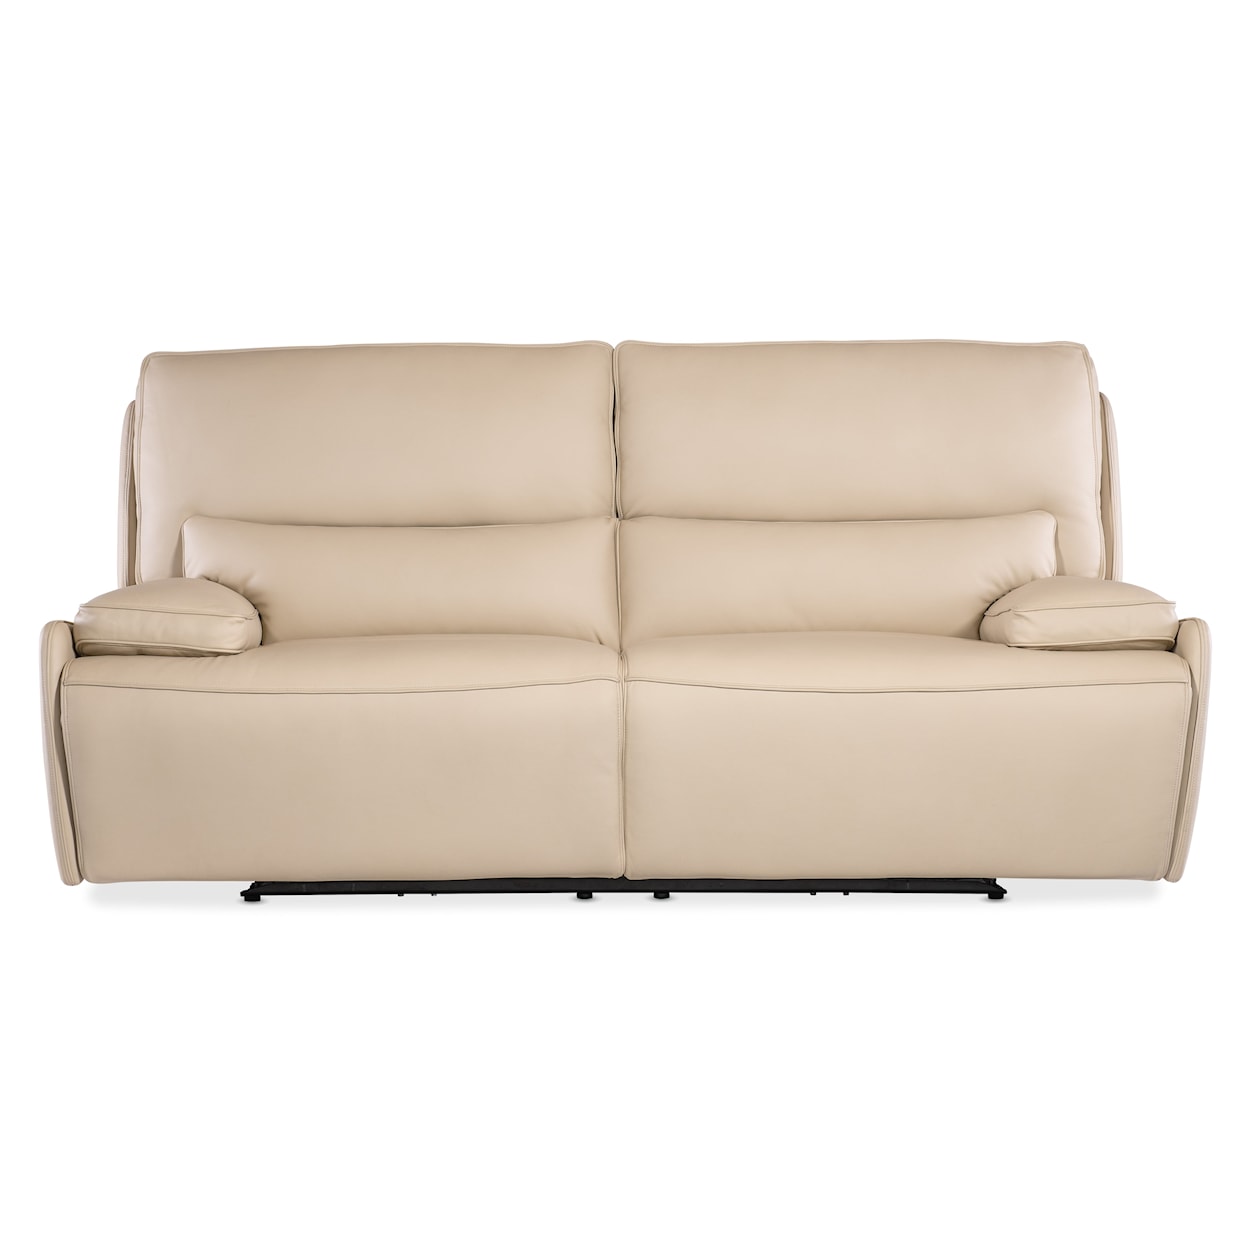 Hooker Furniture MS Power Reclining Sofa